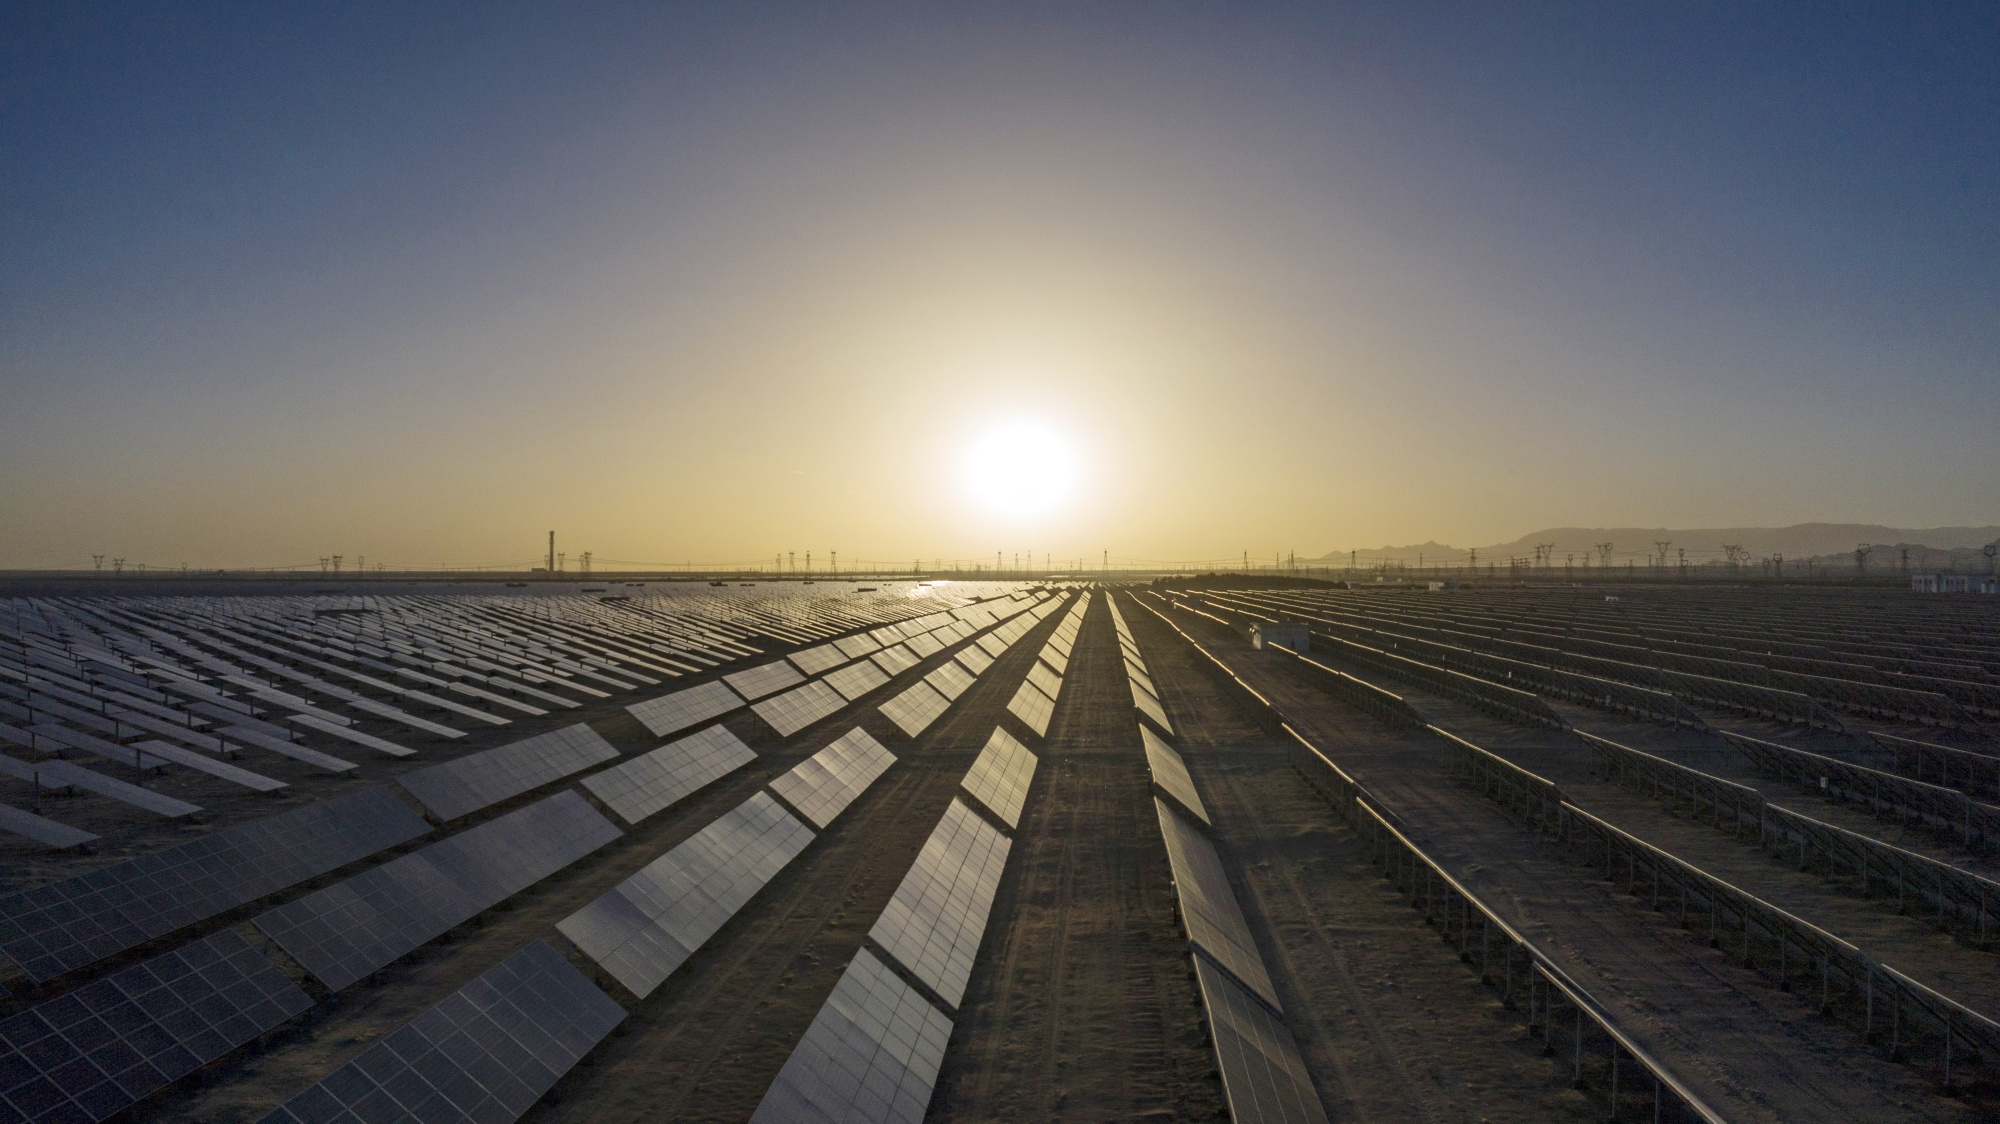 Photovoltaic modules at a solar power plant near Golmud, Qinghai province, China.